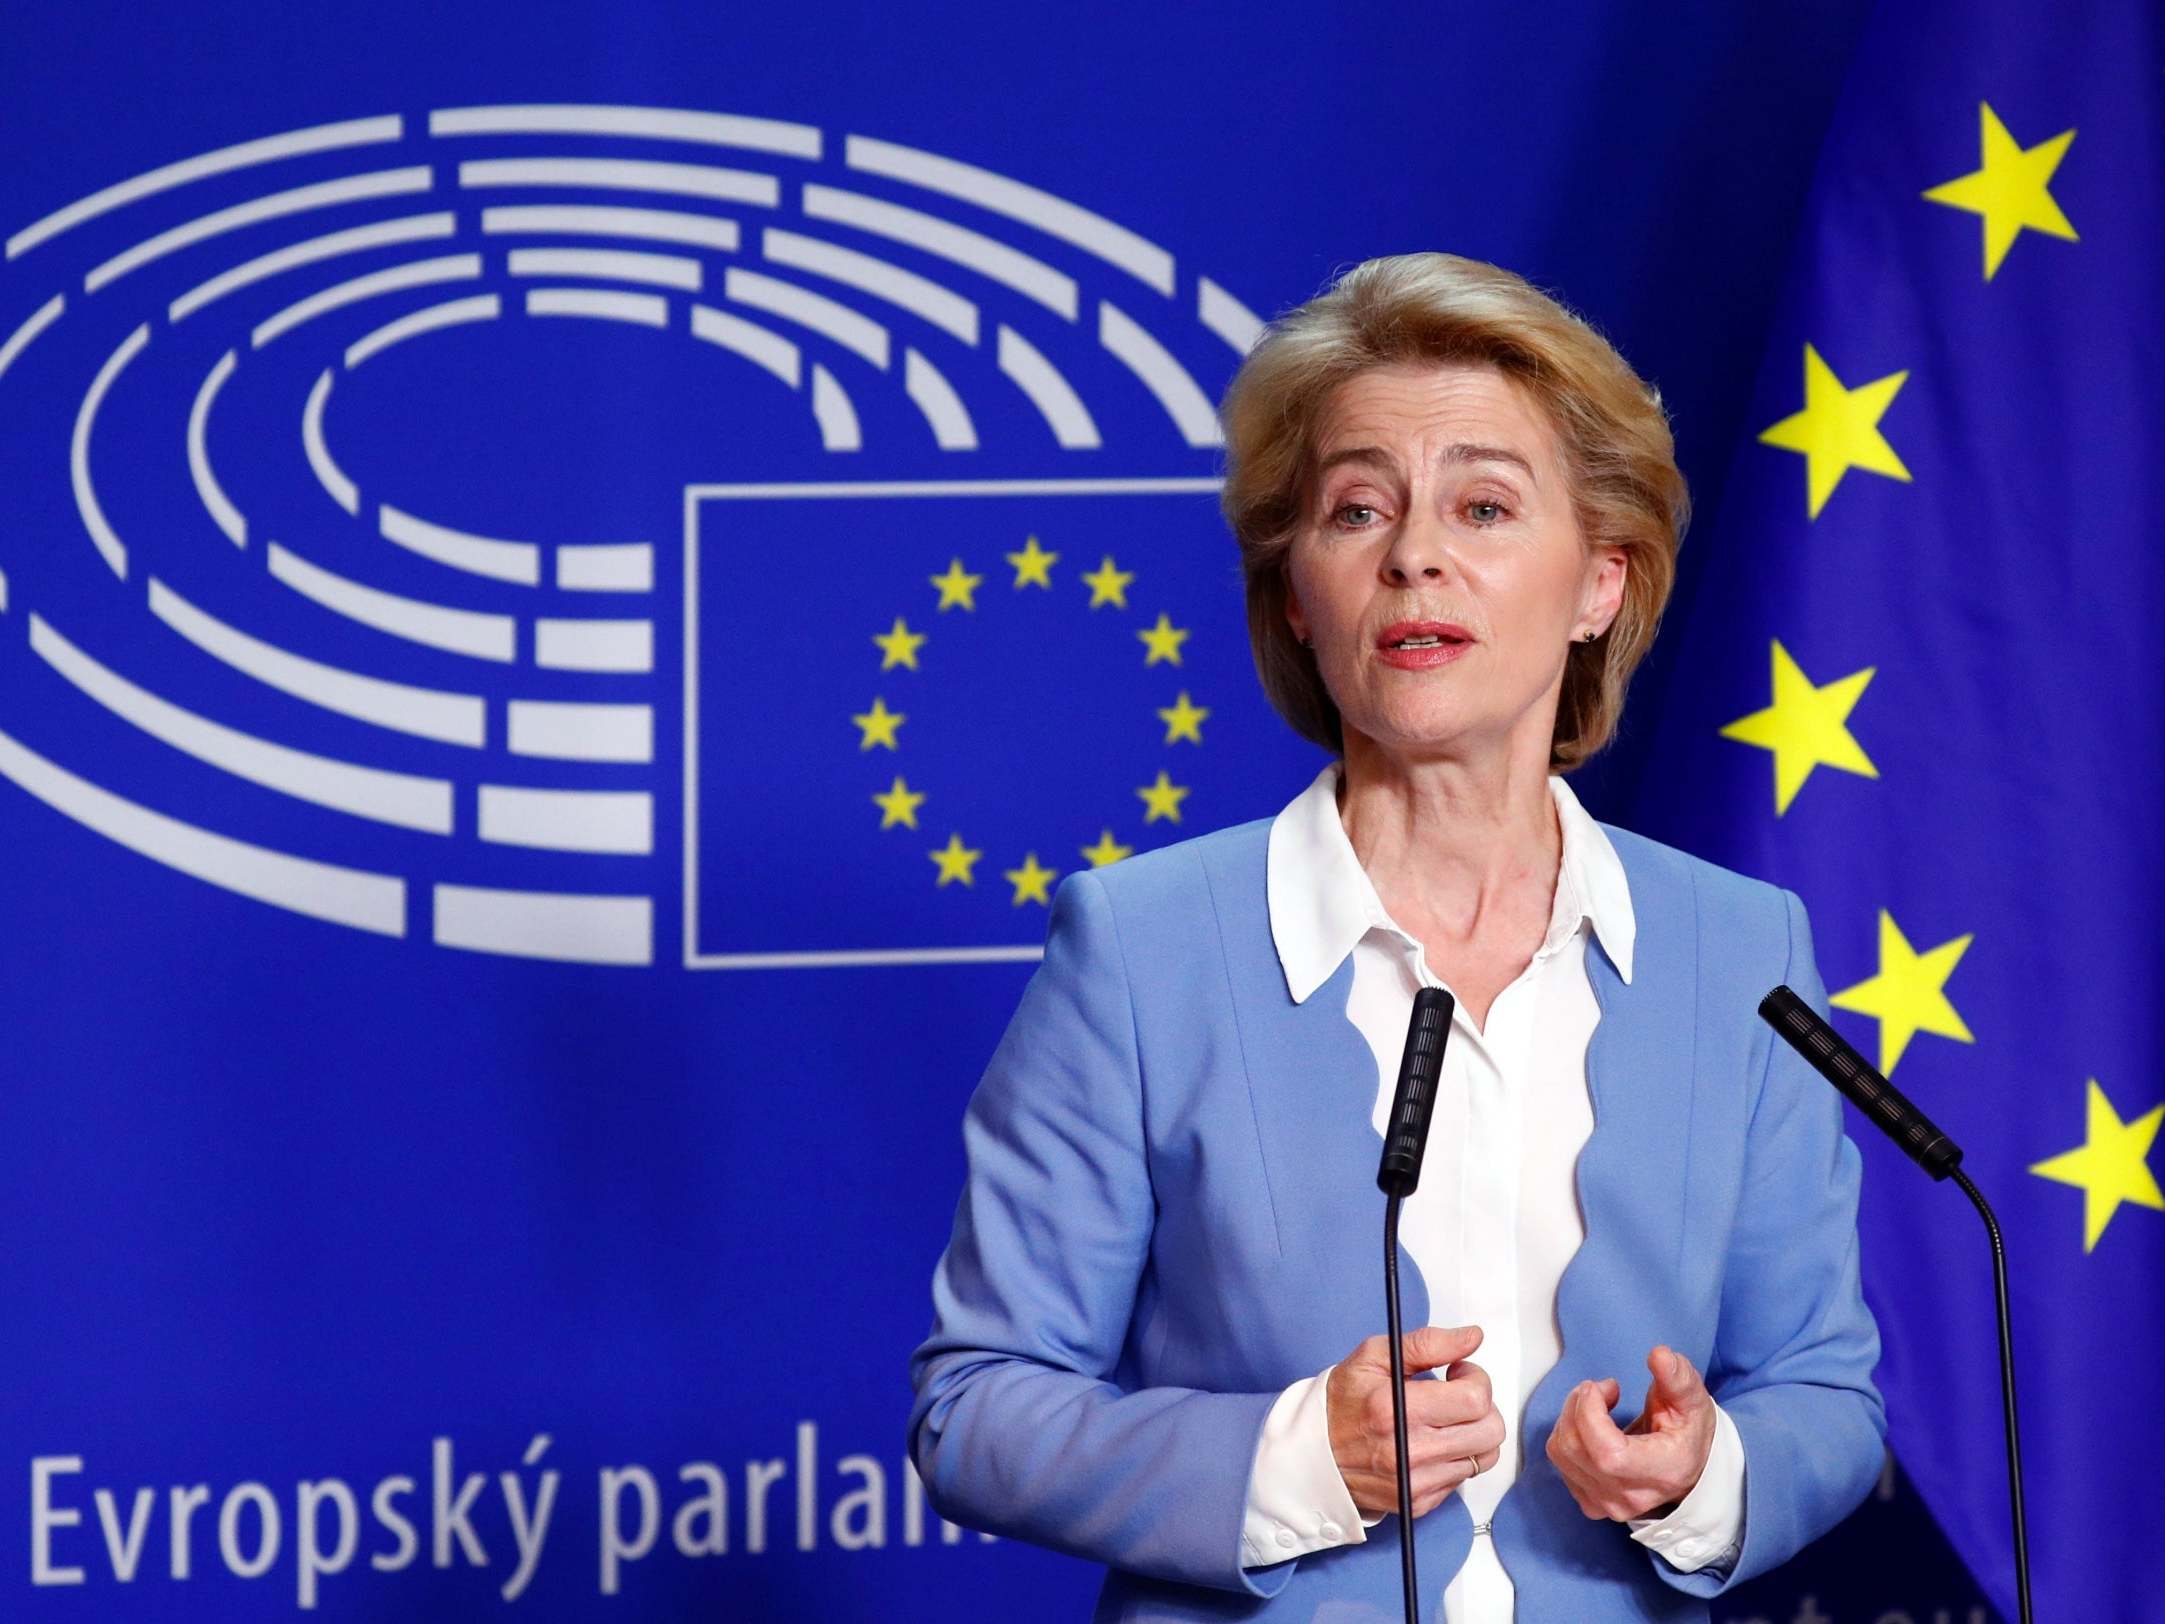 Ursula von der Leyen said she would consider extending the Brexit deadline